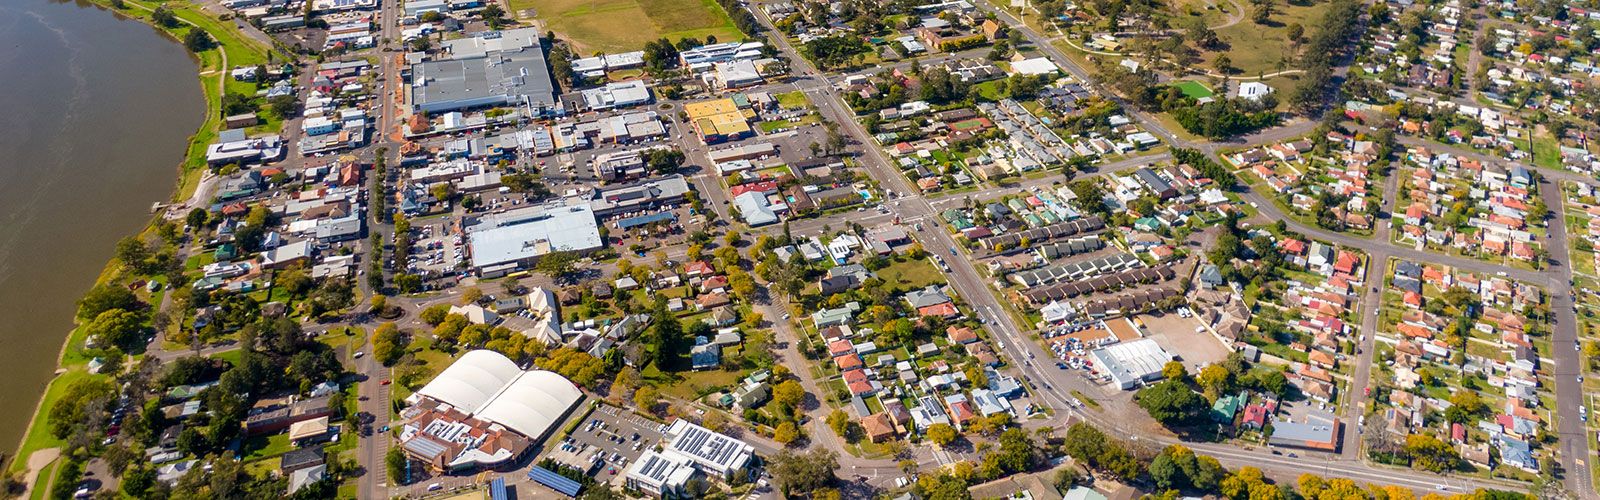 Housing in Port Stephens banner image